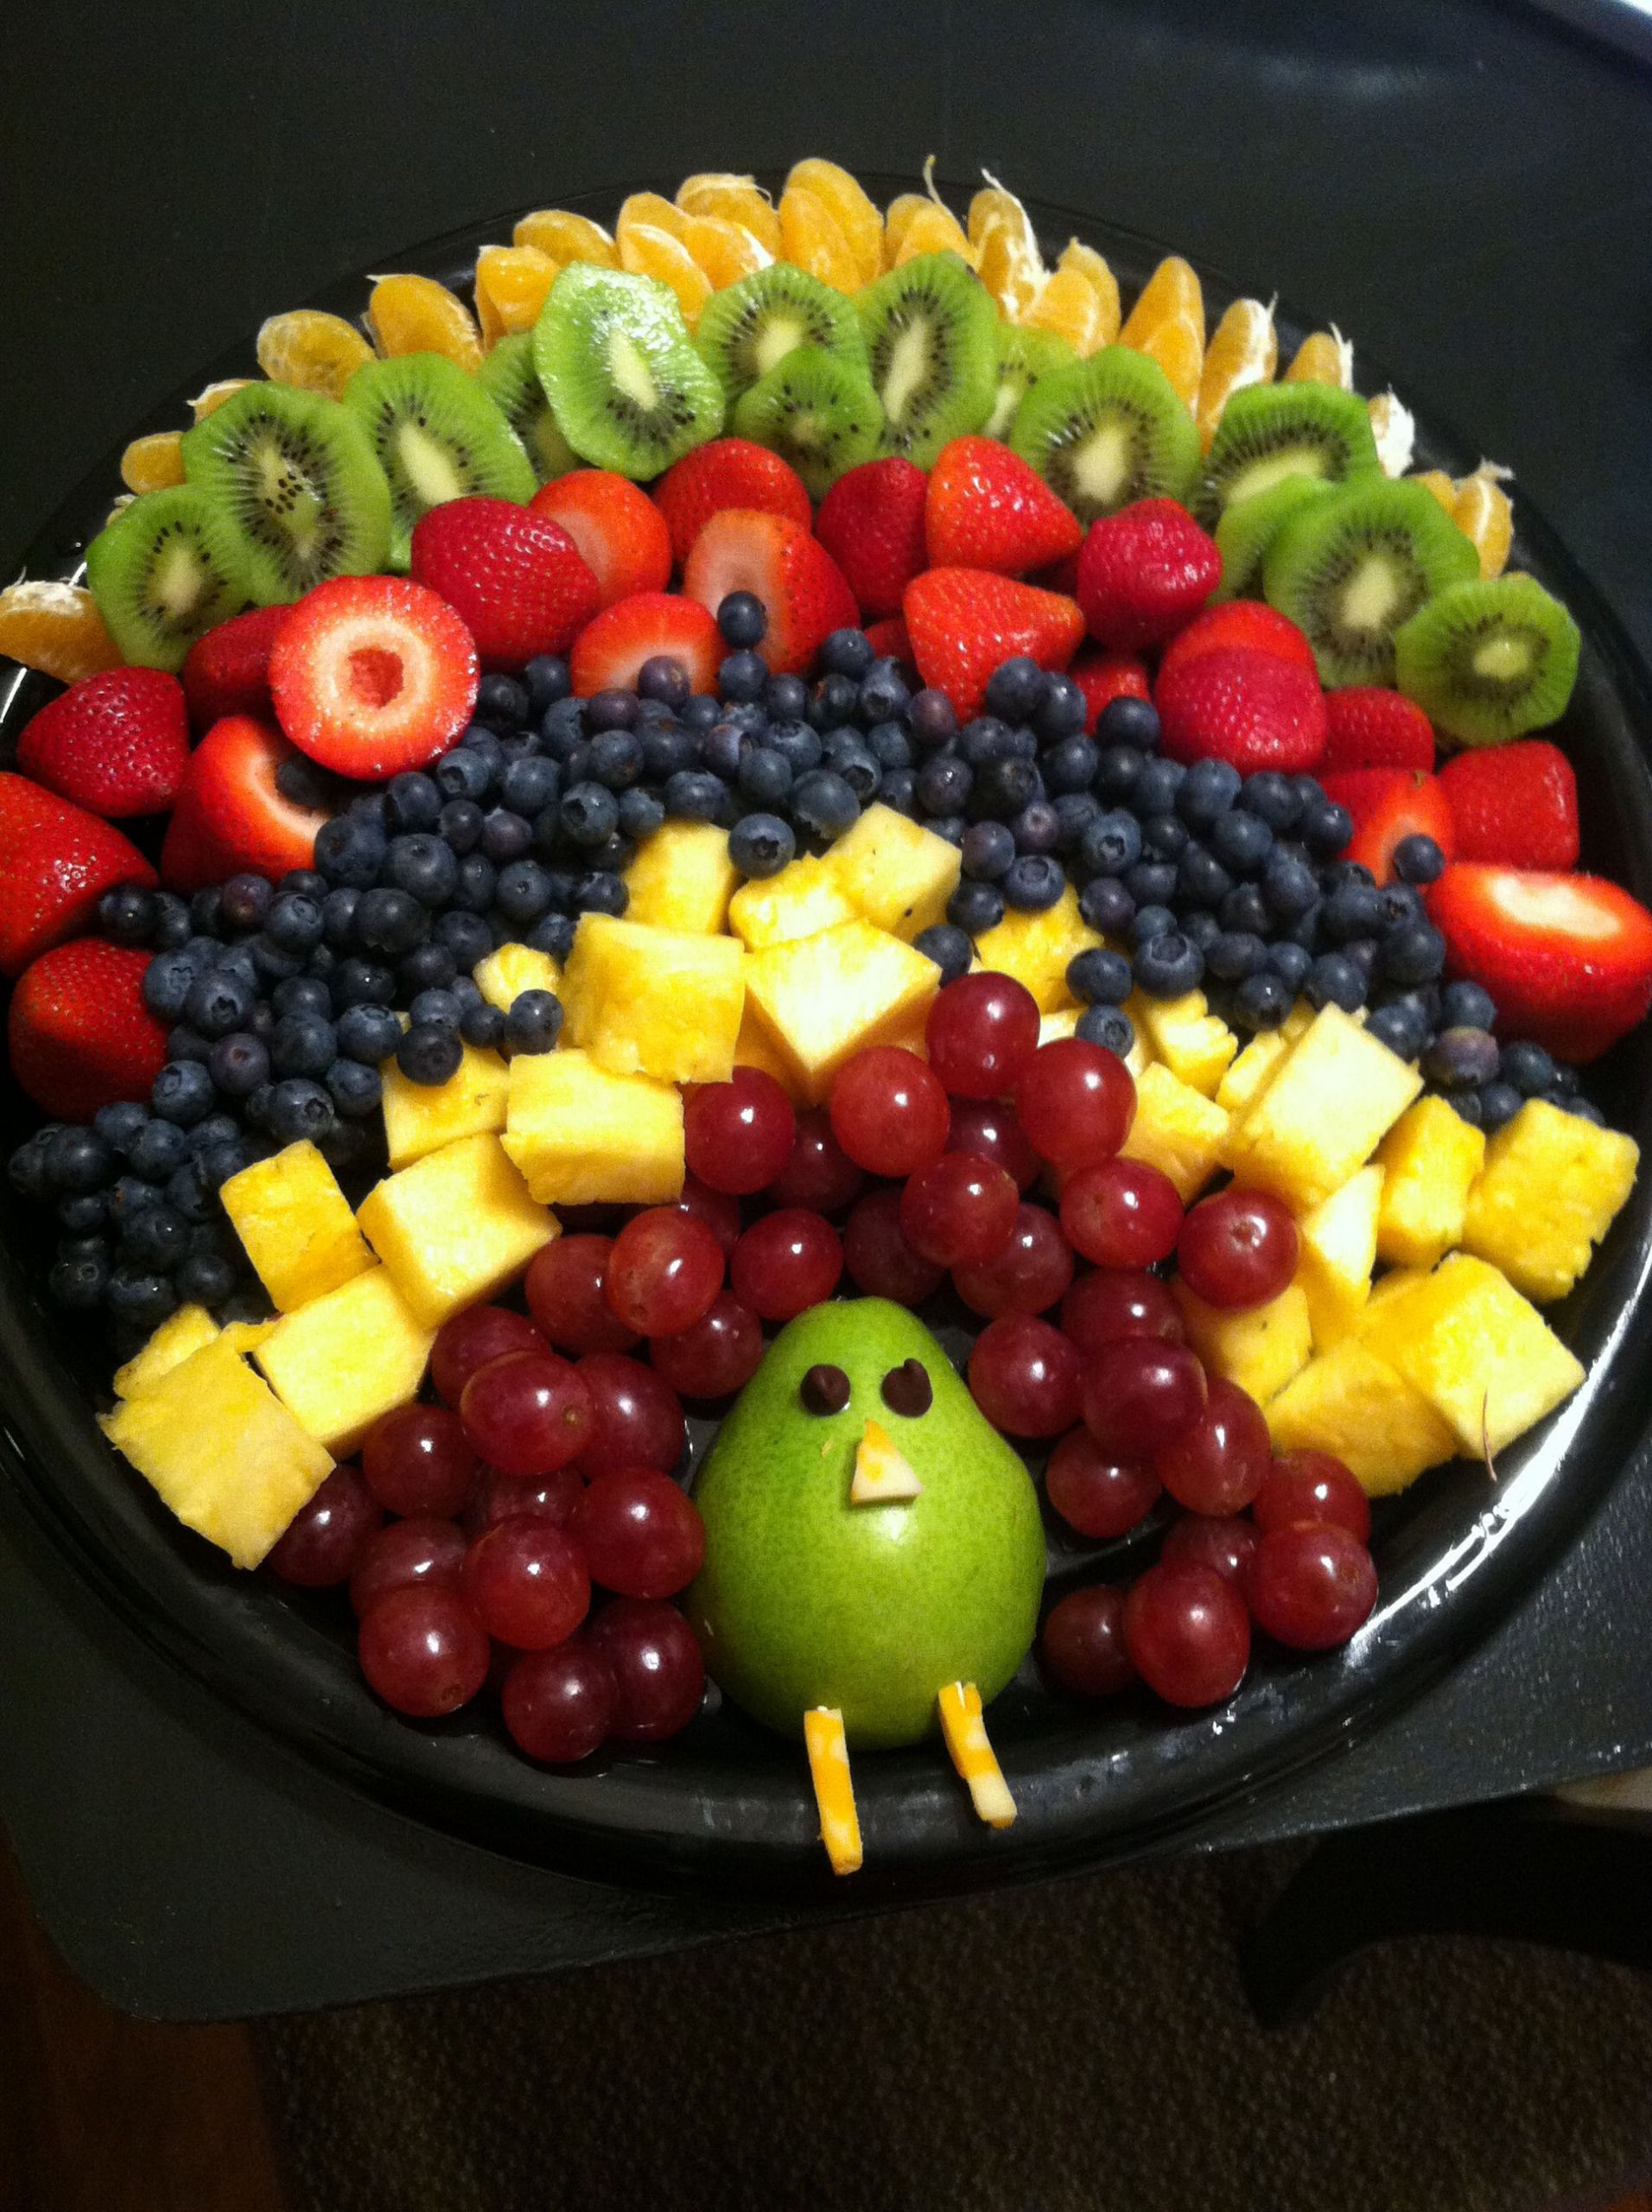 Thanksgiving Fruit Platter Ideas
 Fruit tray for thanksgiving morning